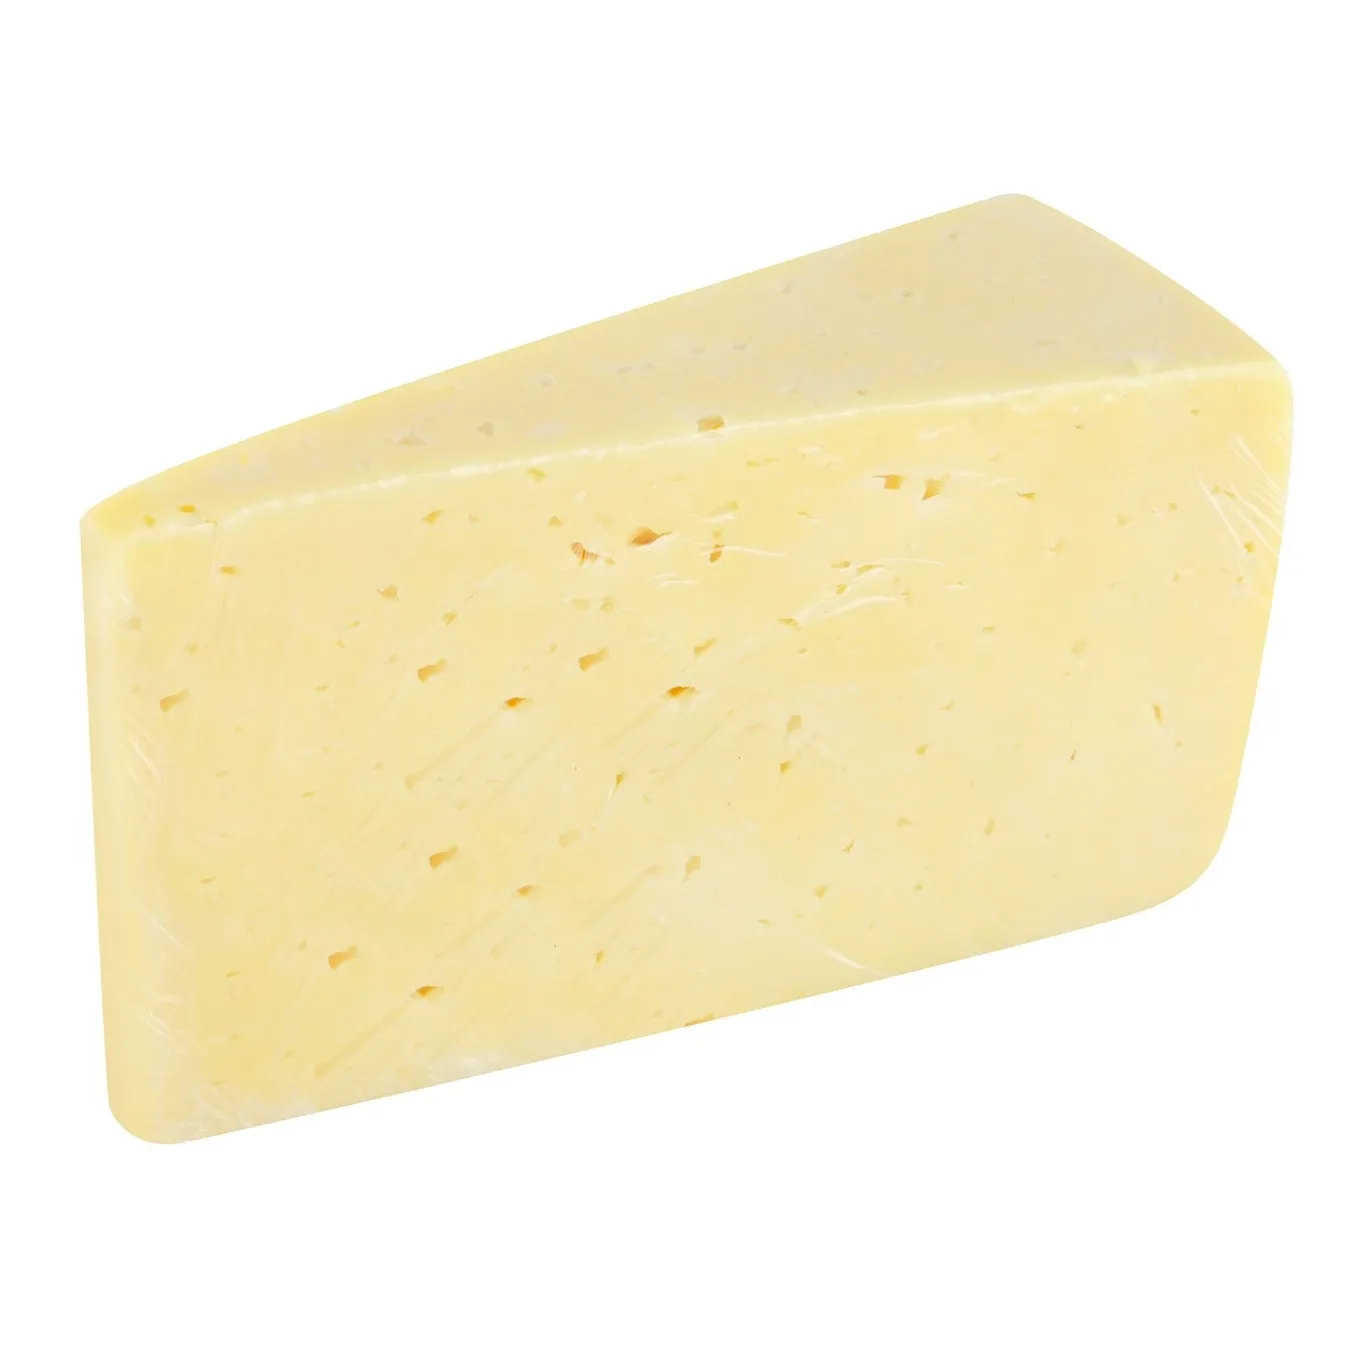 Hard cheese Shostka Ukrainian 50% by weight